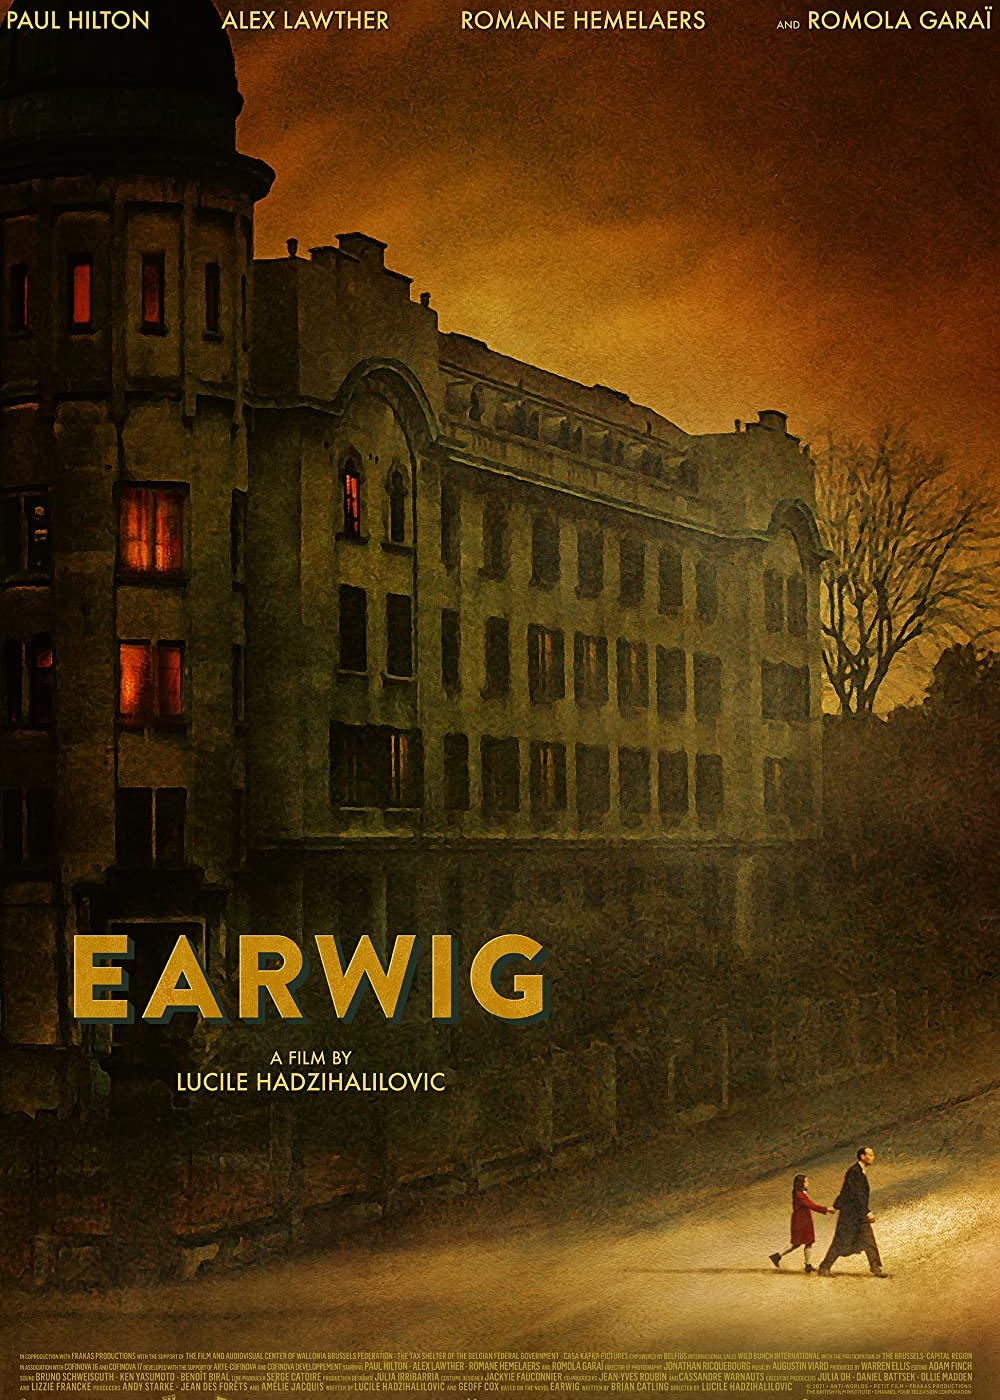  Earwig Movie 2022, Official Trailer, Release Date